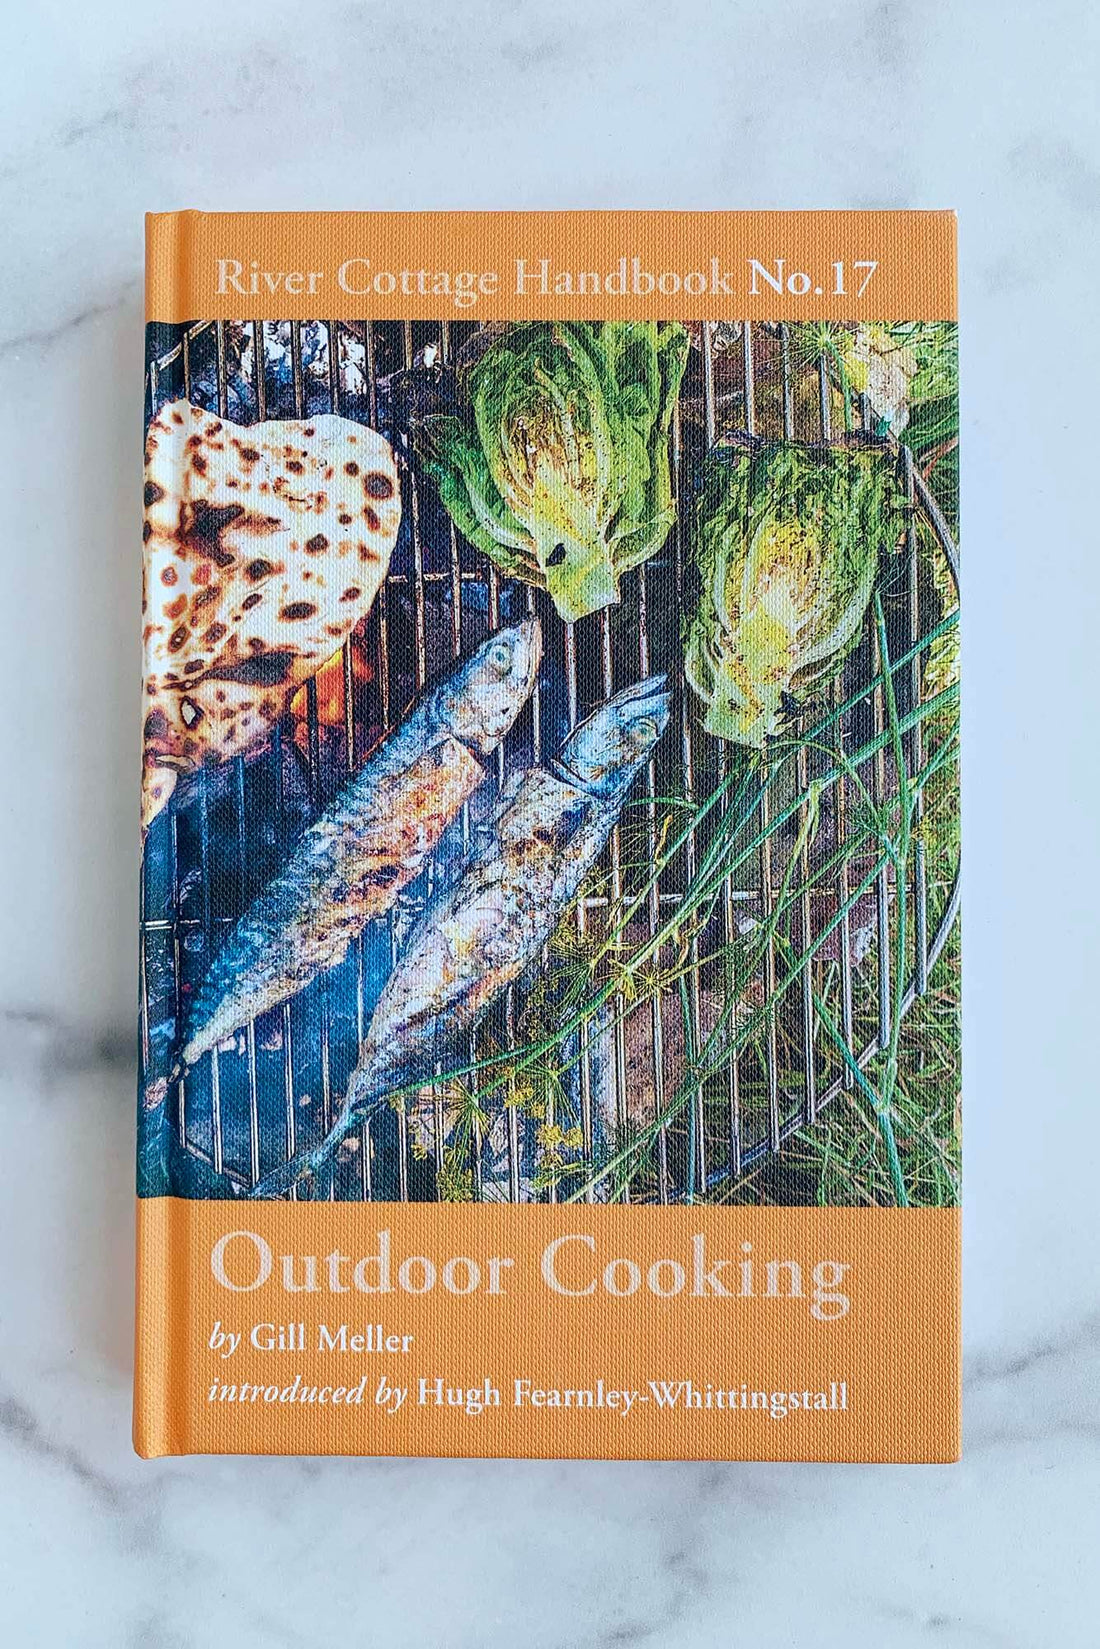 River Cottage Handbook: Outdoor Cooking